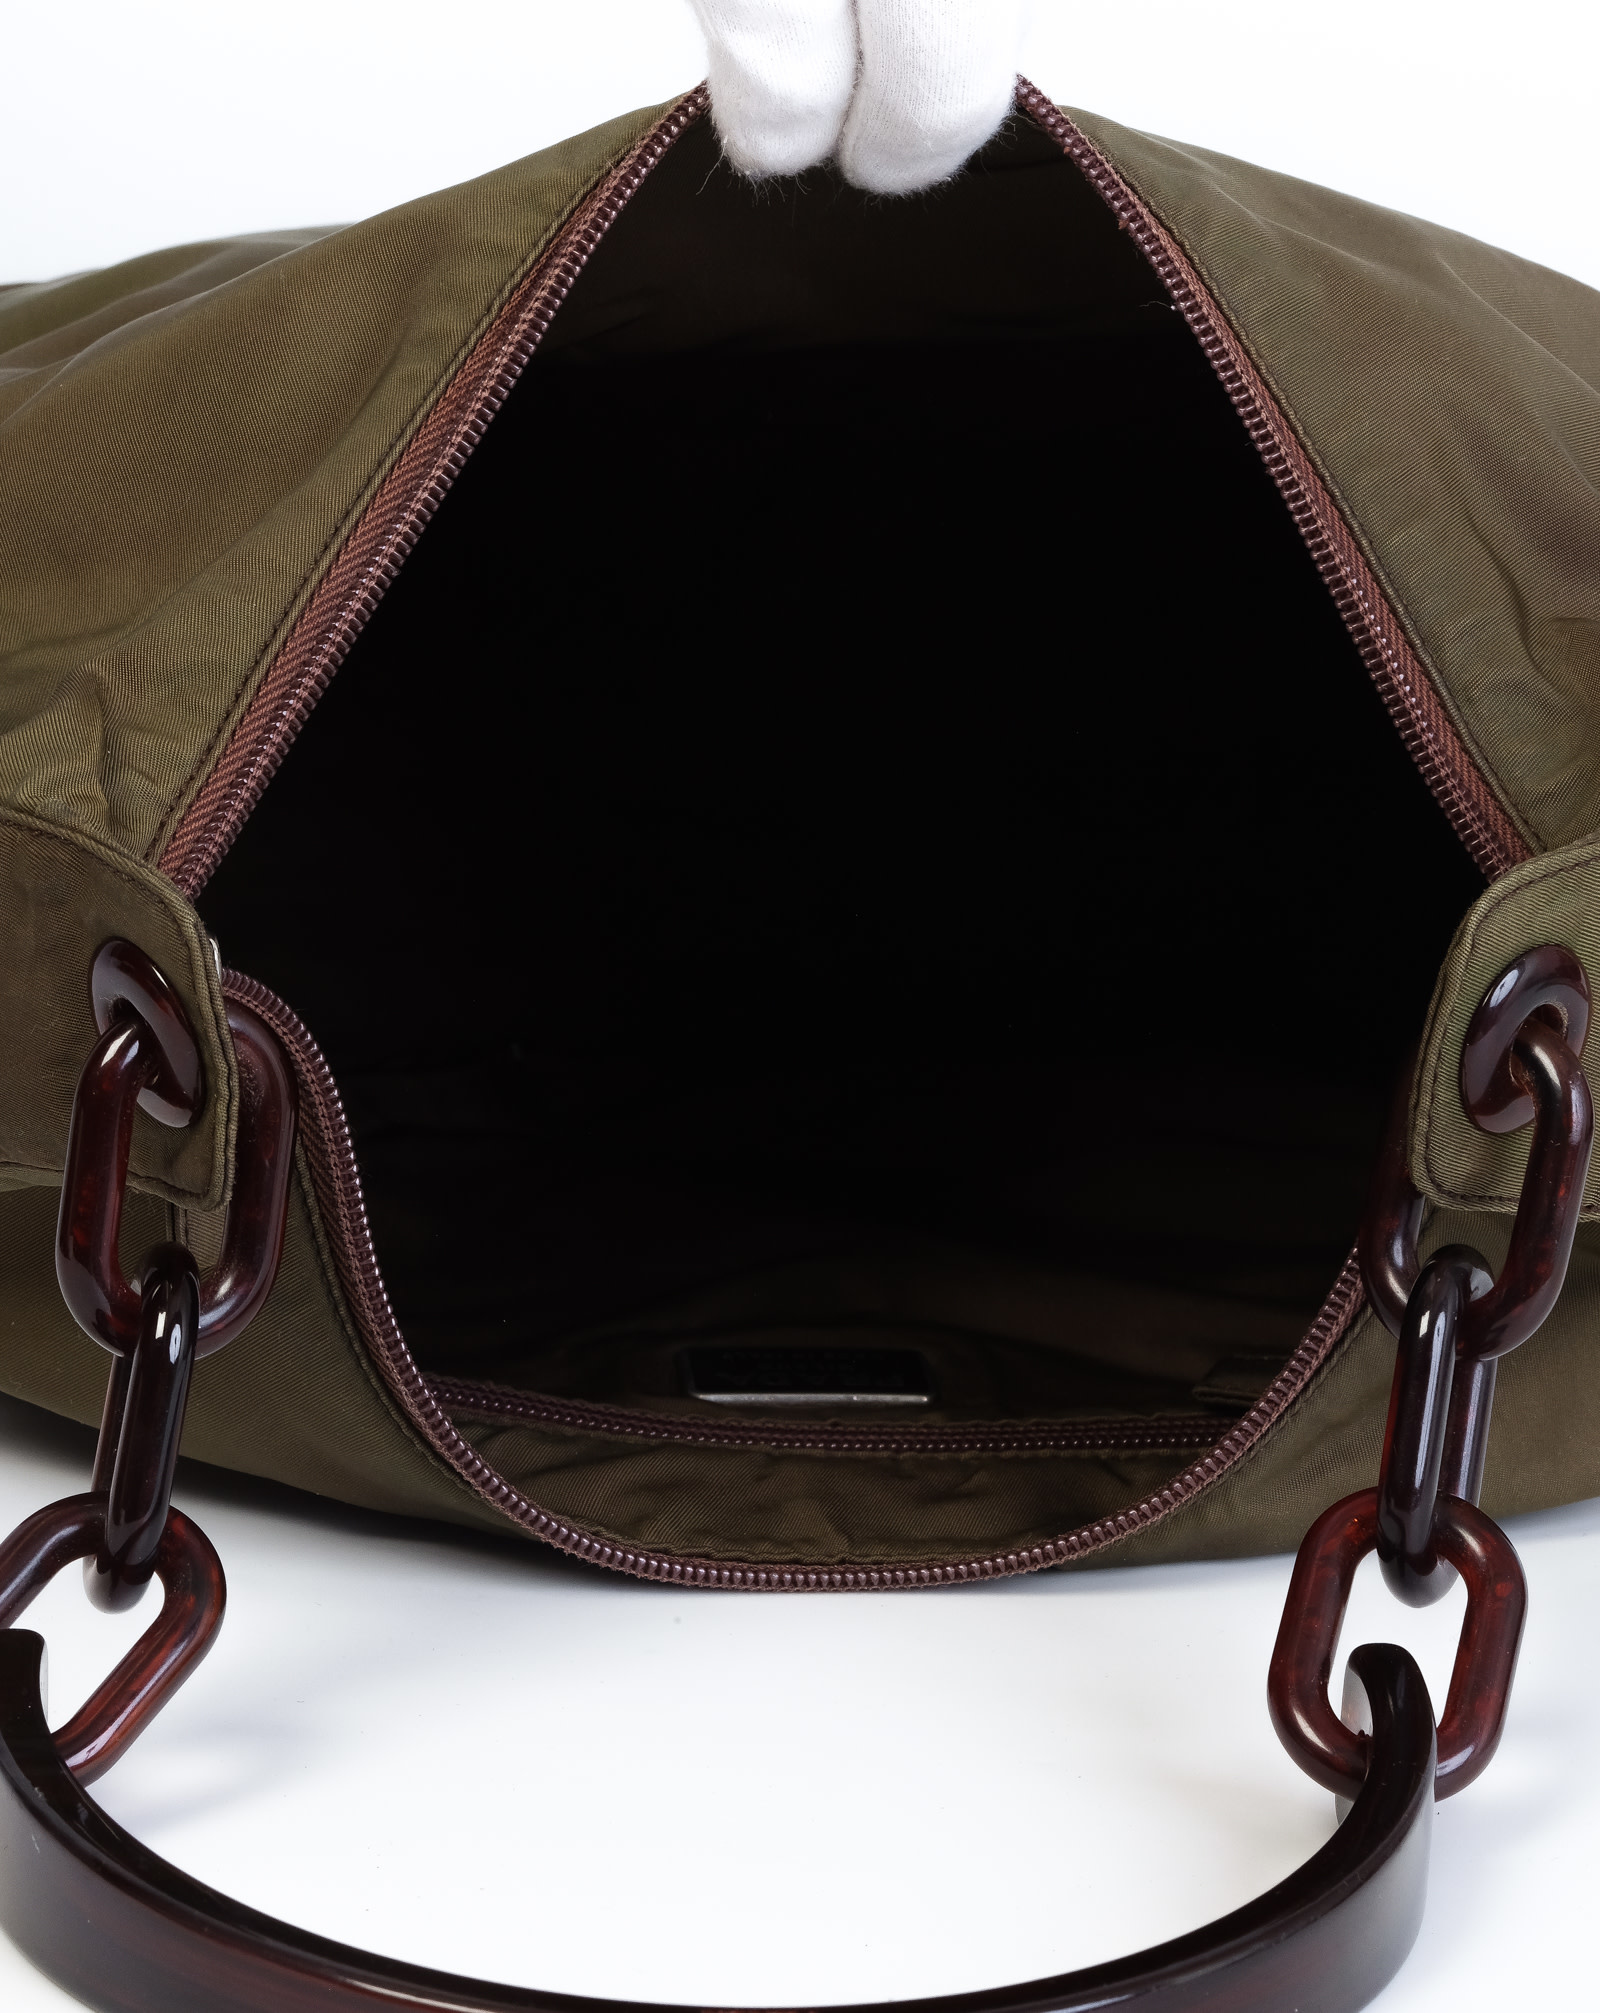 PRADA Galleria Double-Zip small Saffiano Leather Tote Bag Navy Blue